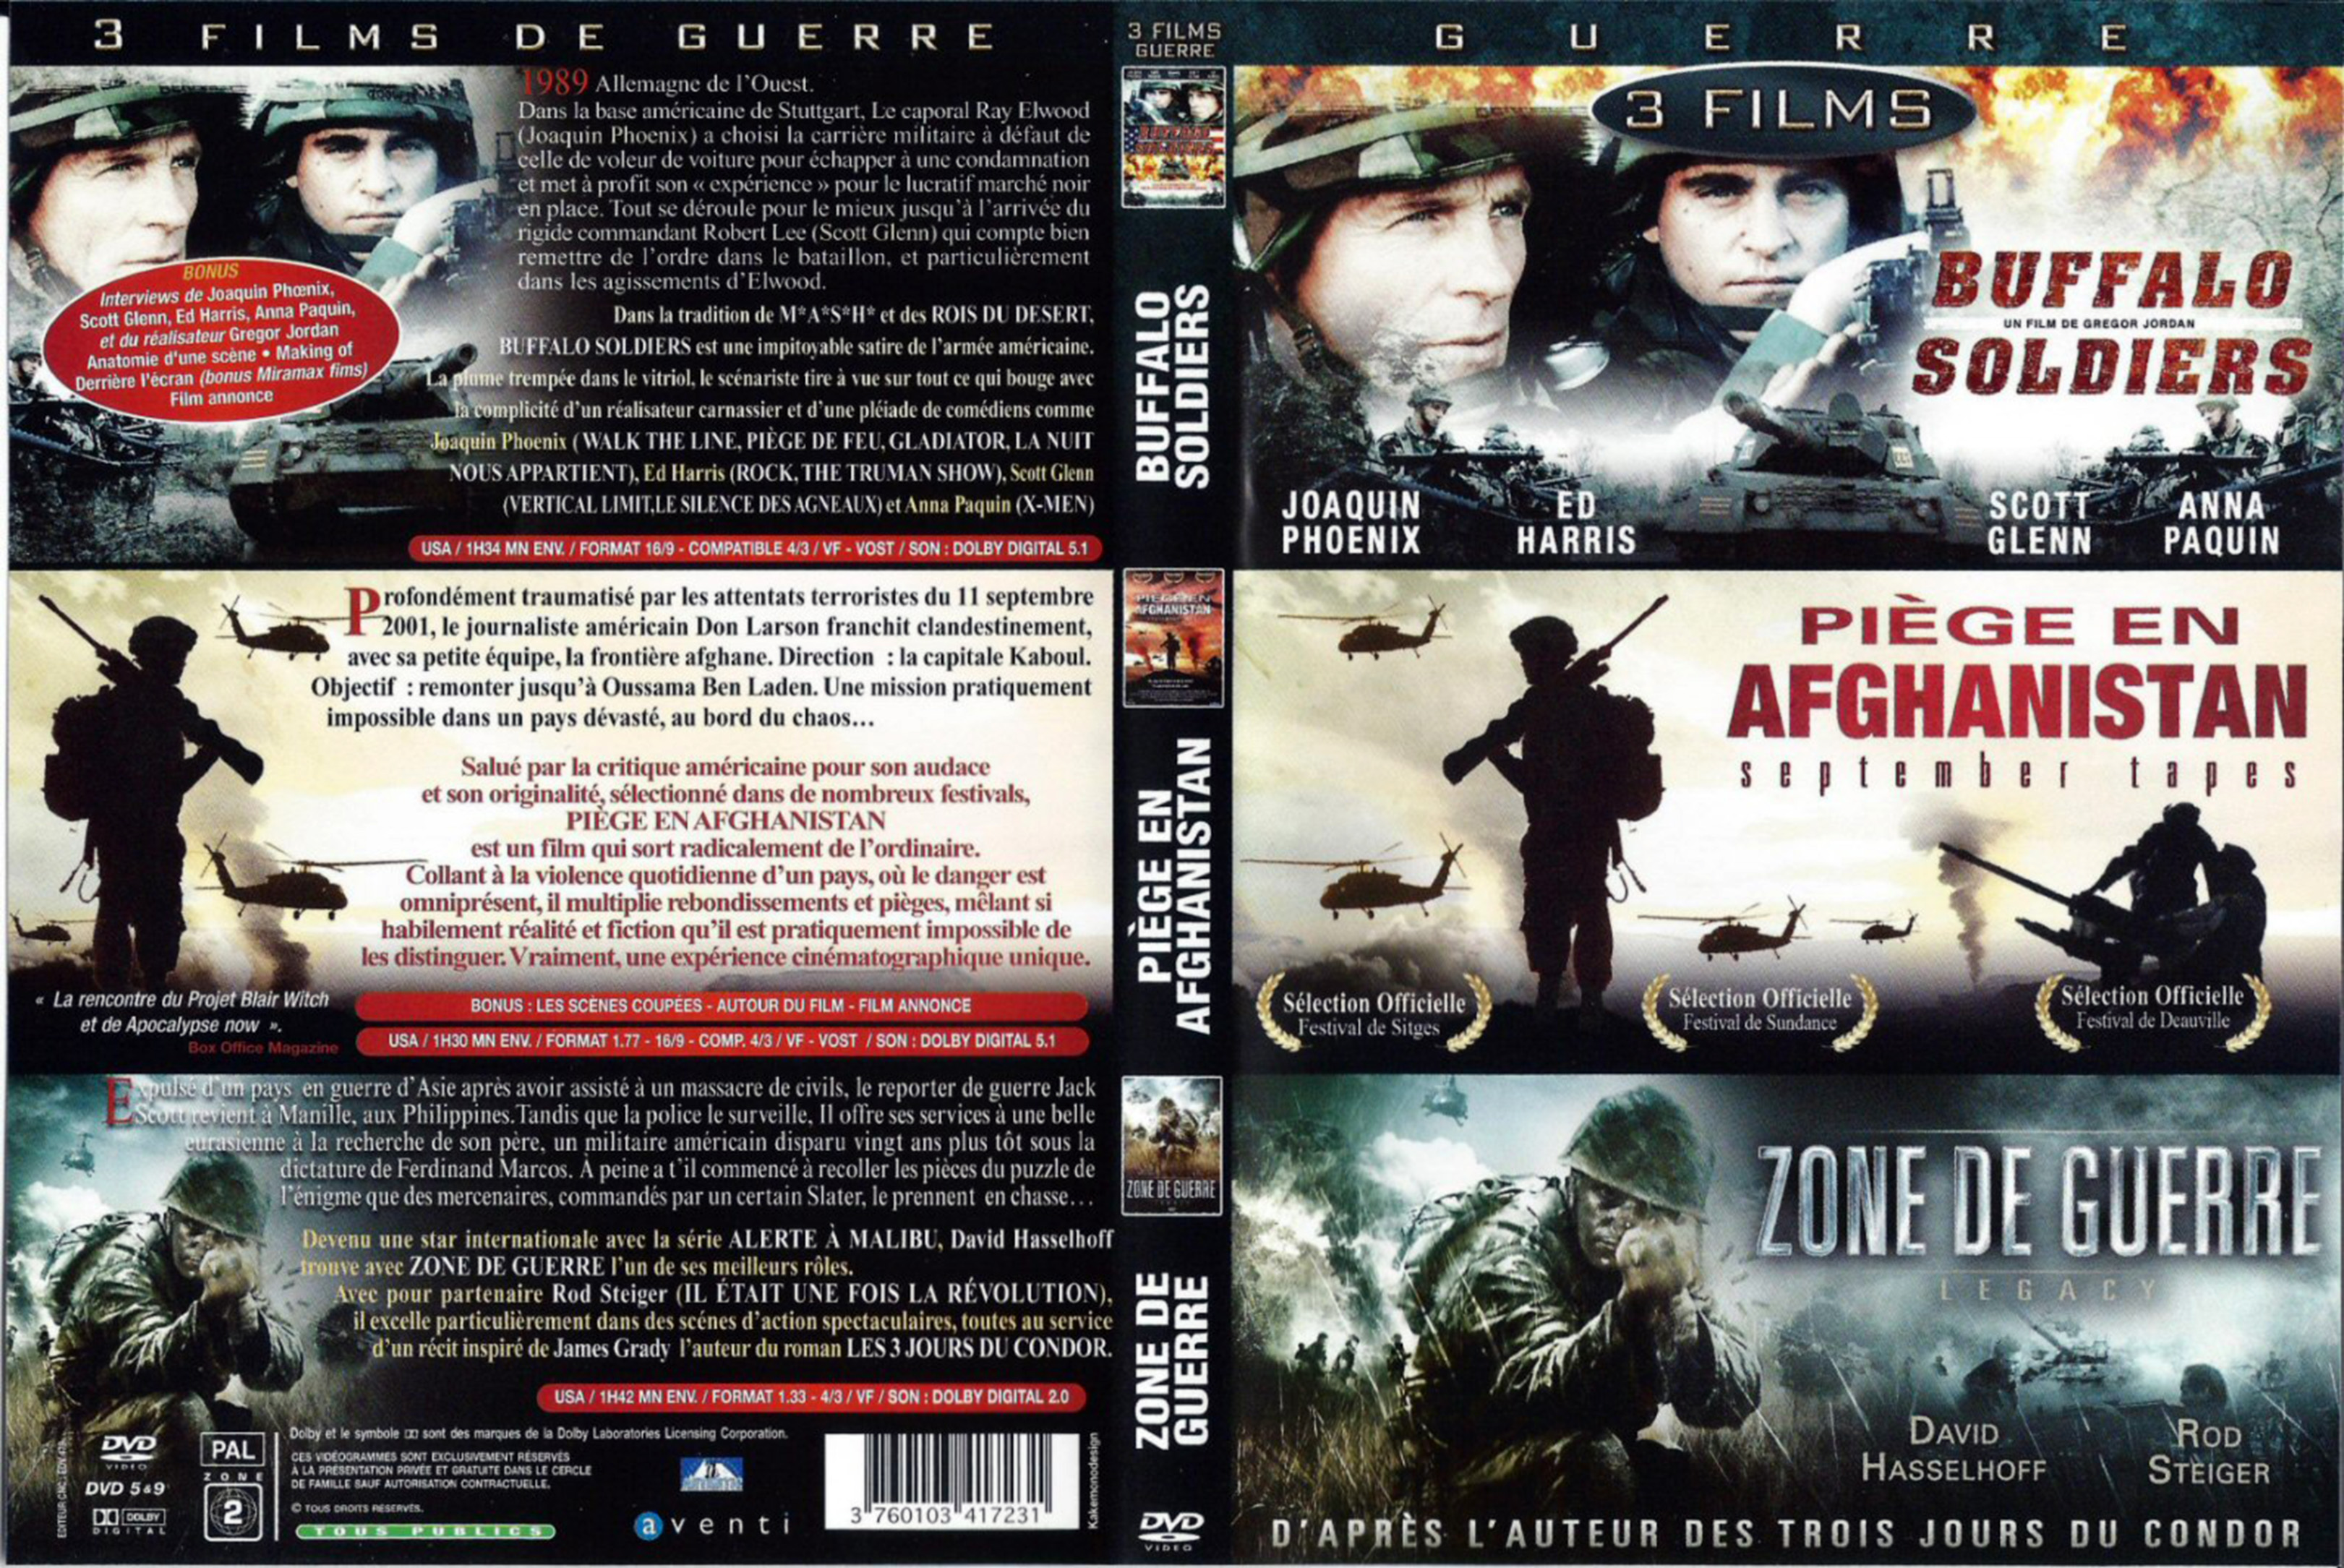 Jaquette DVD Buffalo Soldiers + Pige en Afghanistan + Zone de guerre